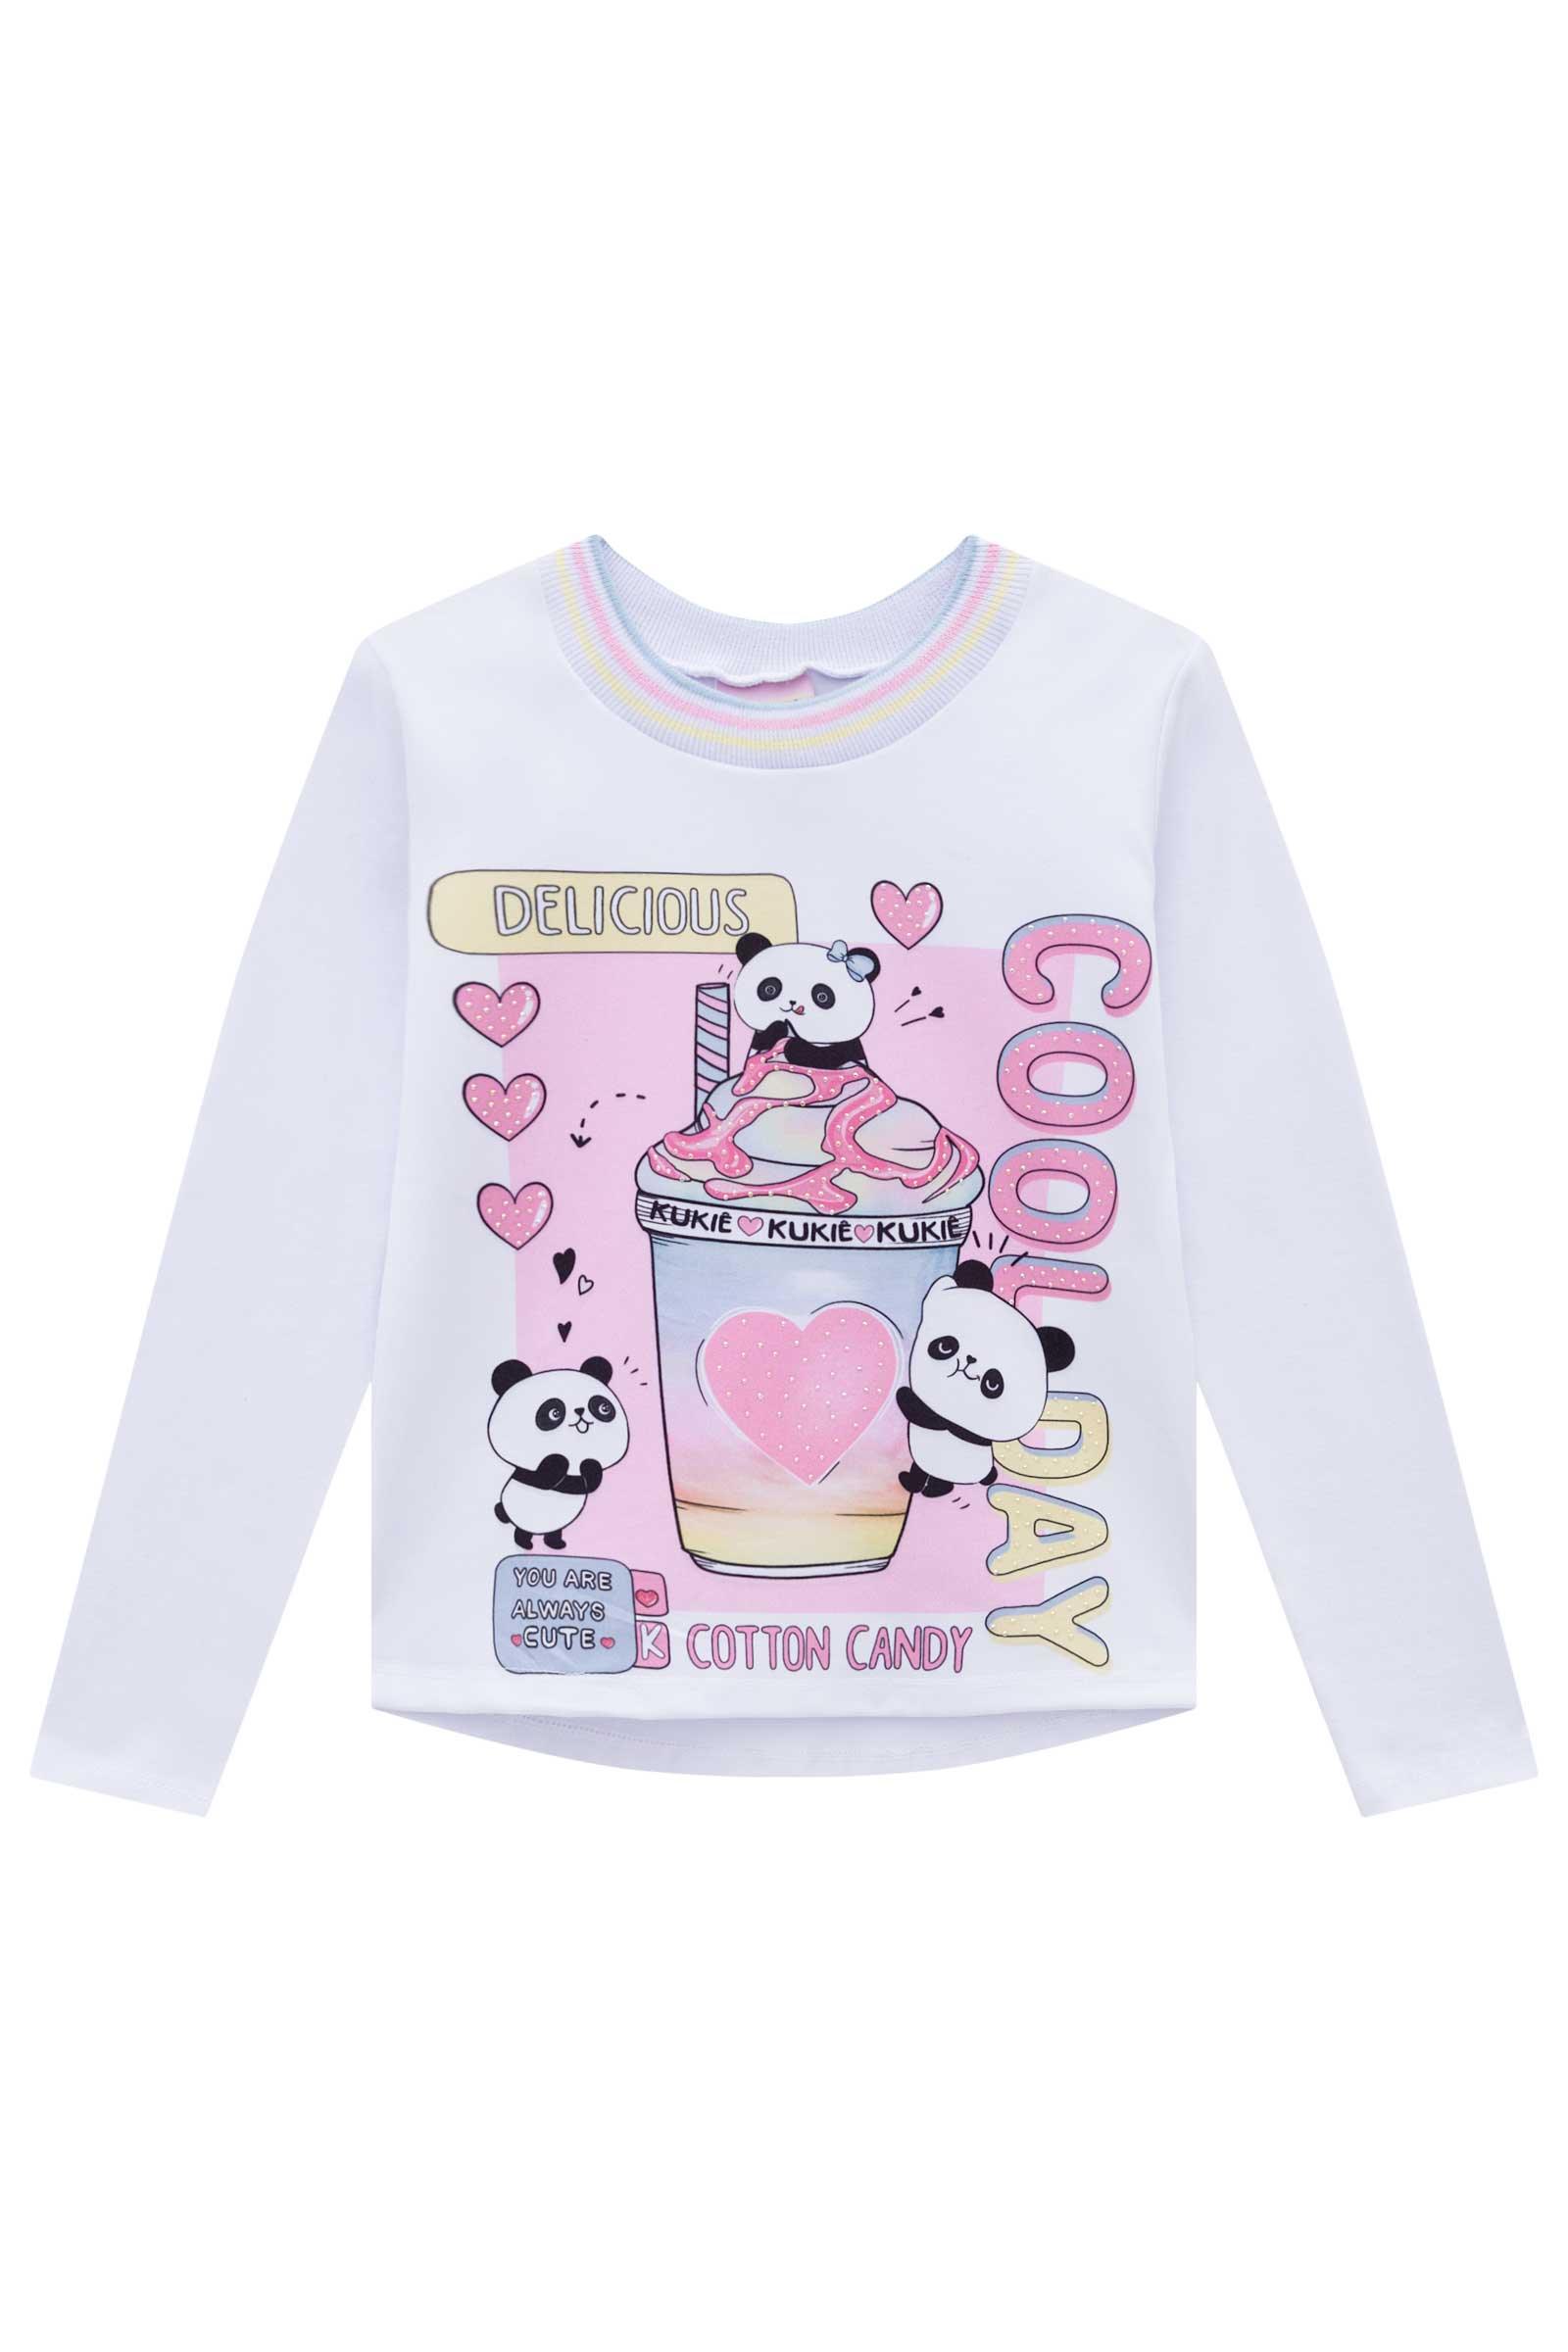 Camiseta Panda Delicious Kukiê - Arisa Kids